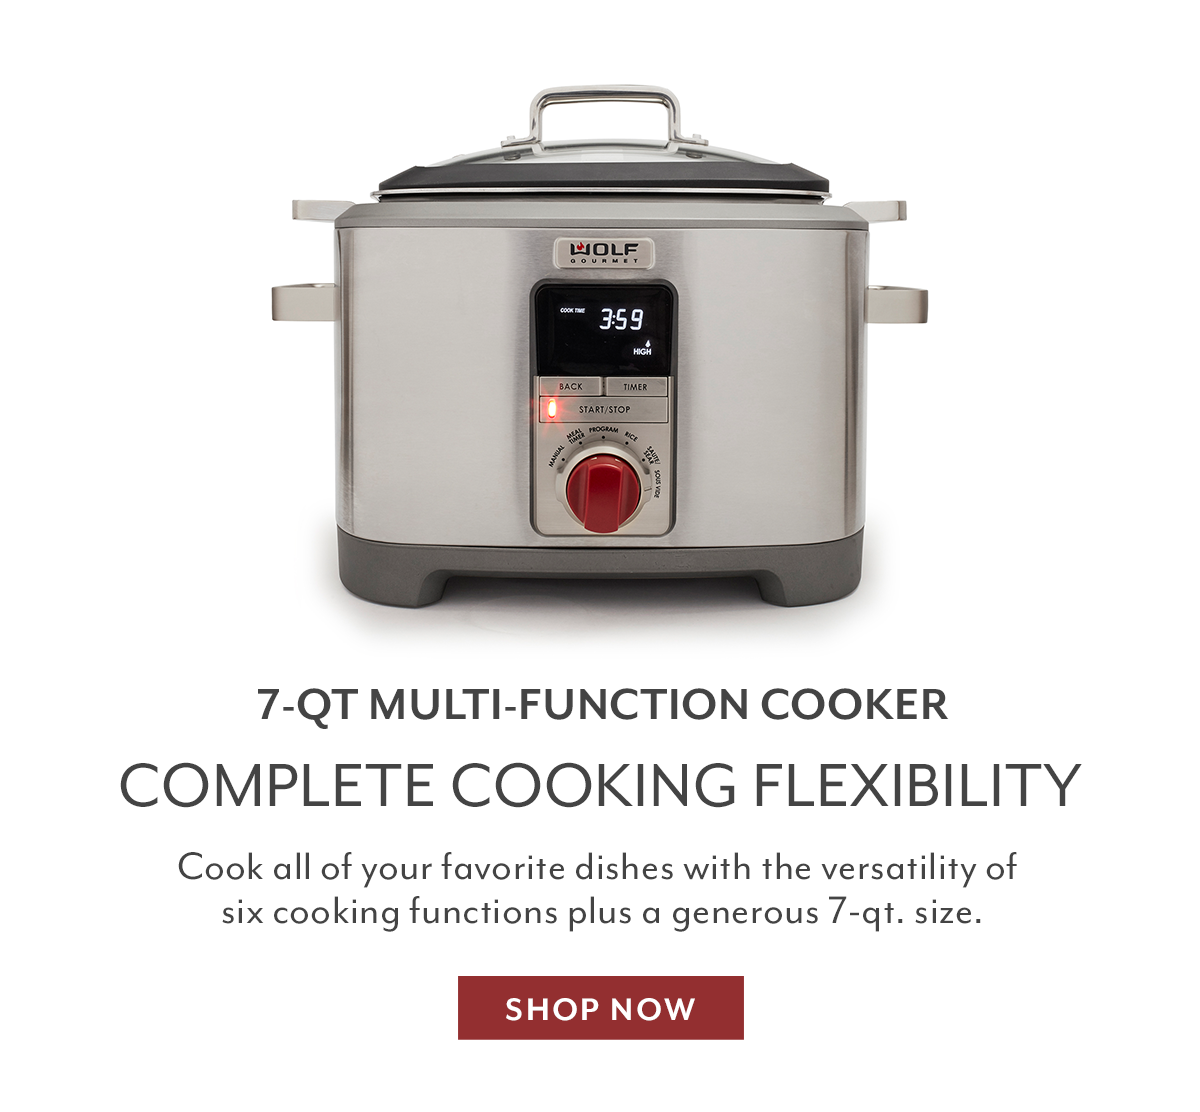 7-QT Multi-Function Cooker